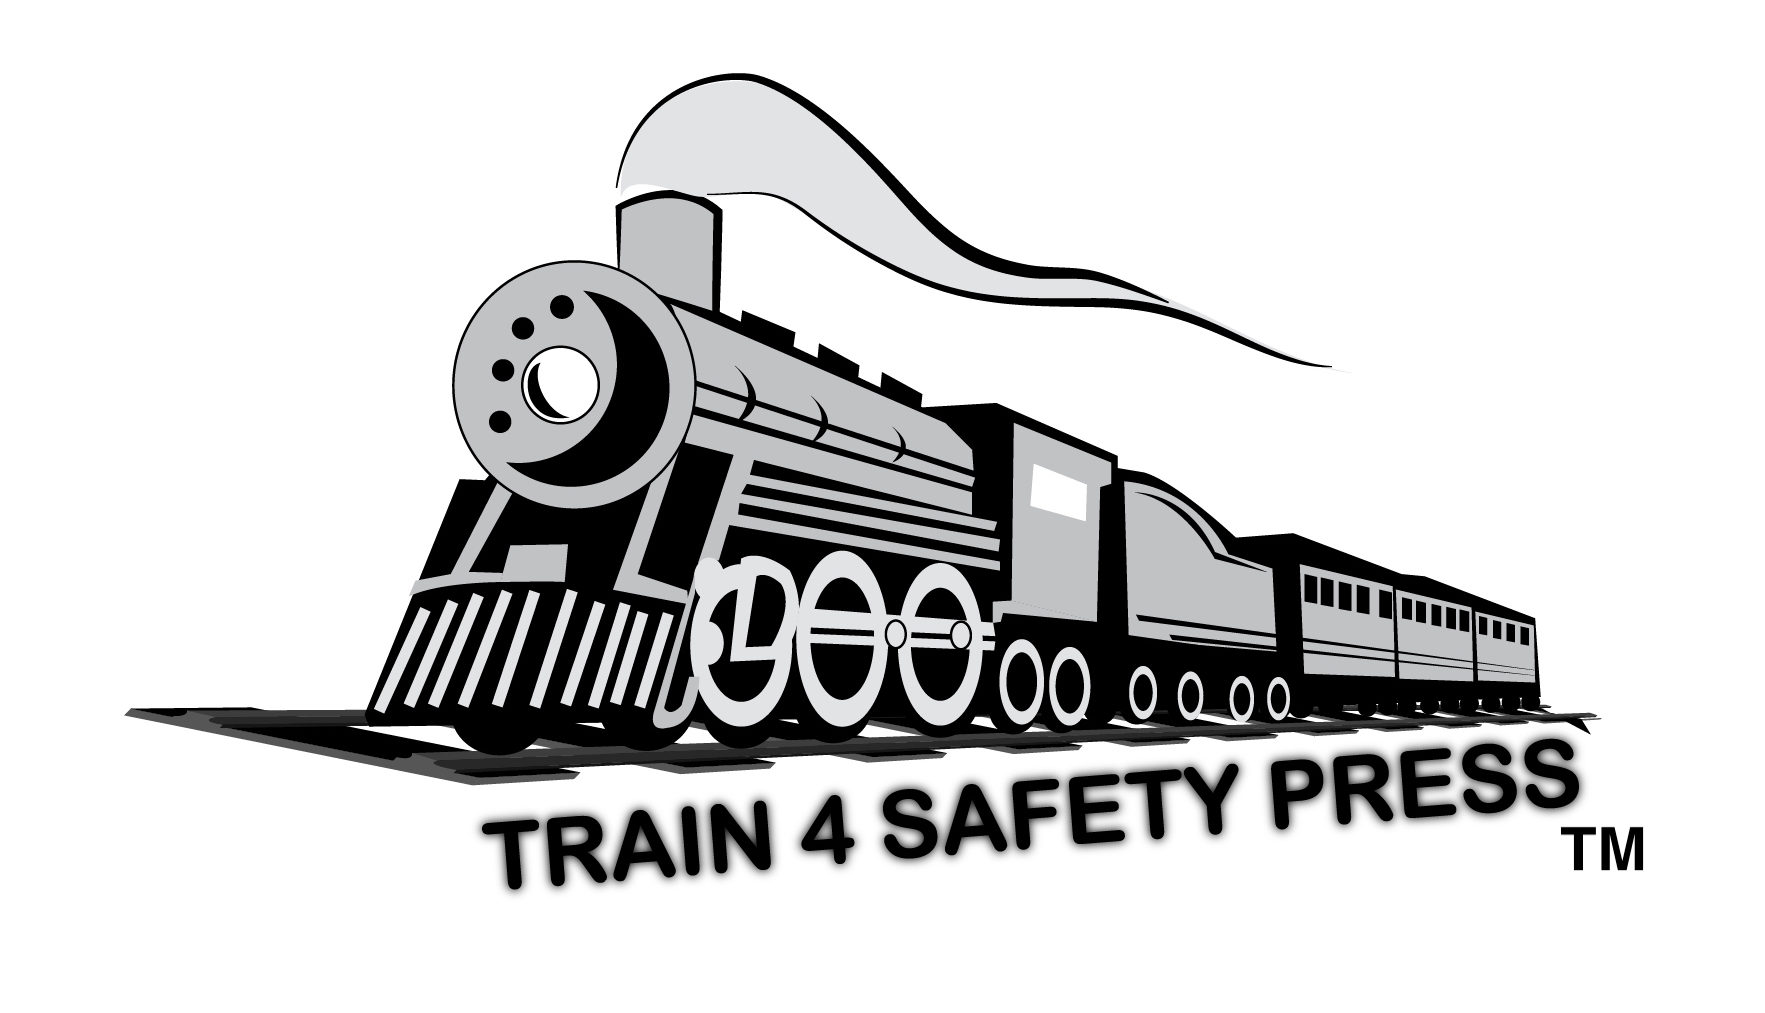 Train 4 Safety Press